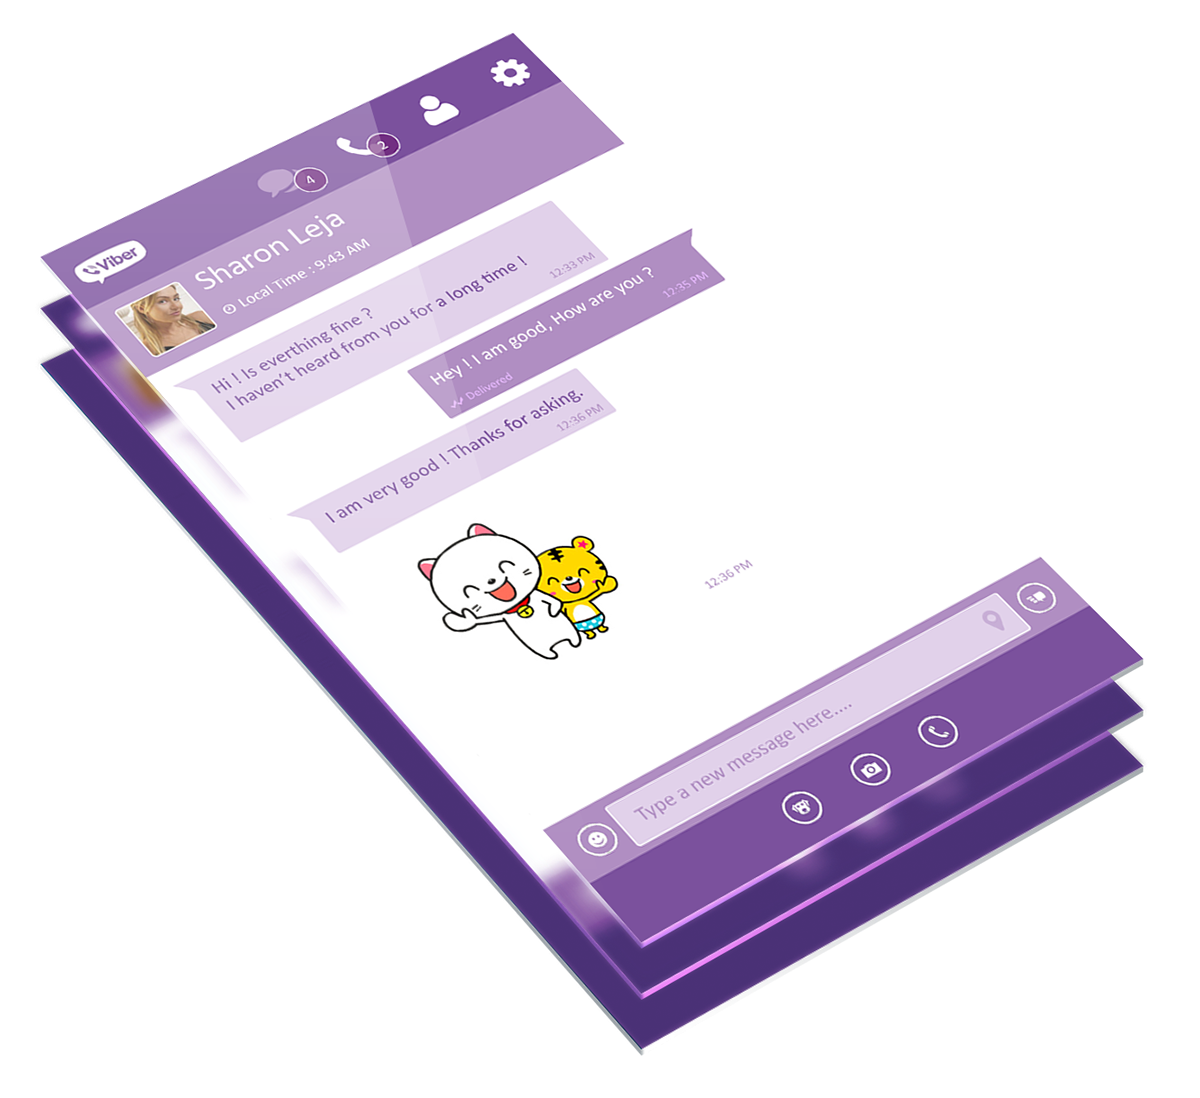 UI ux design windows phone viber redesign application mobile